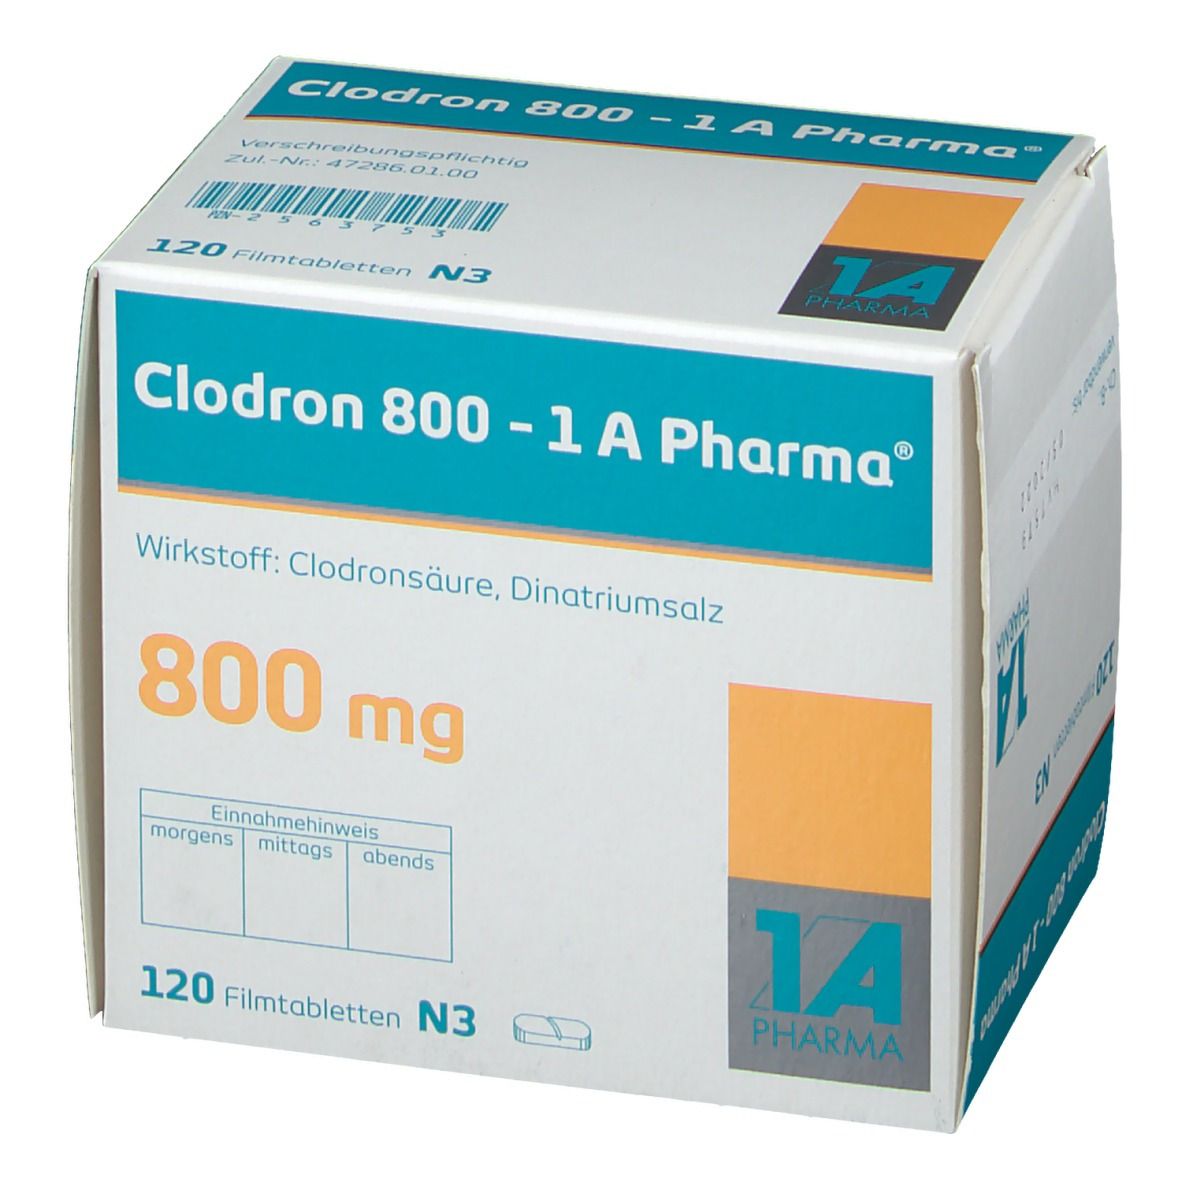 Clodron 800 - 1 A Pharma®